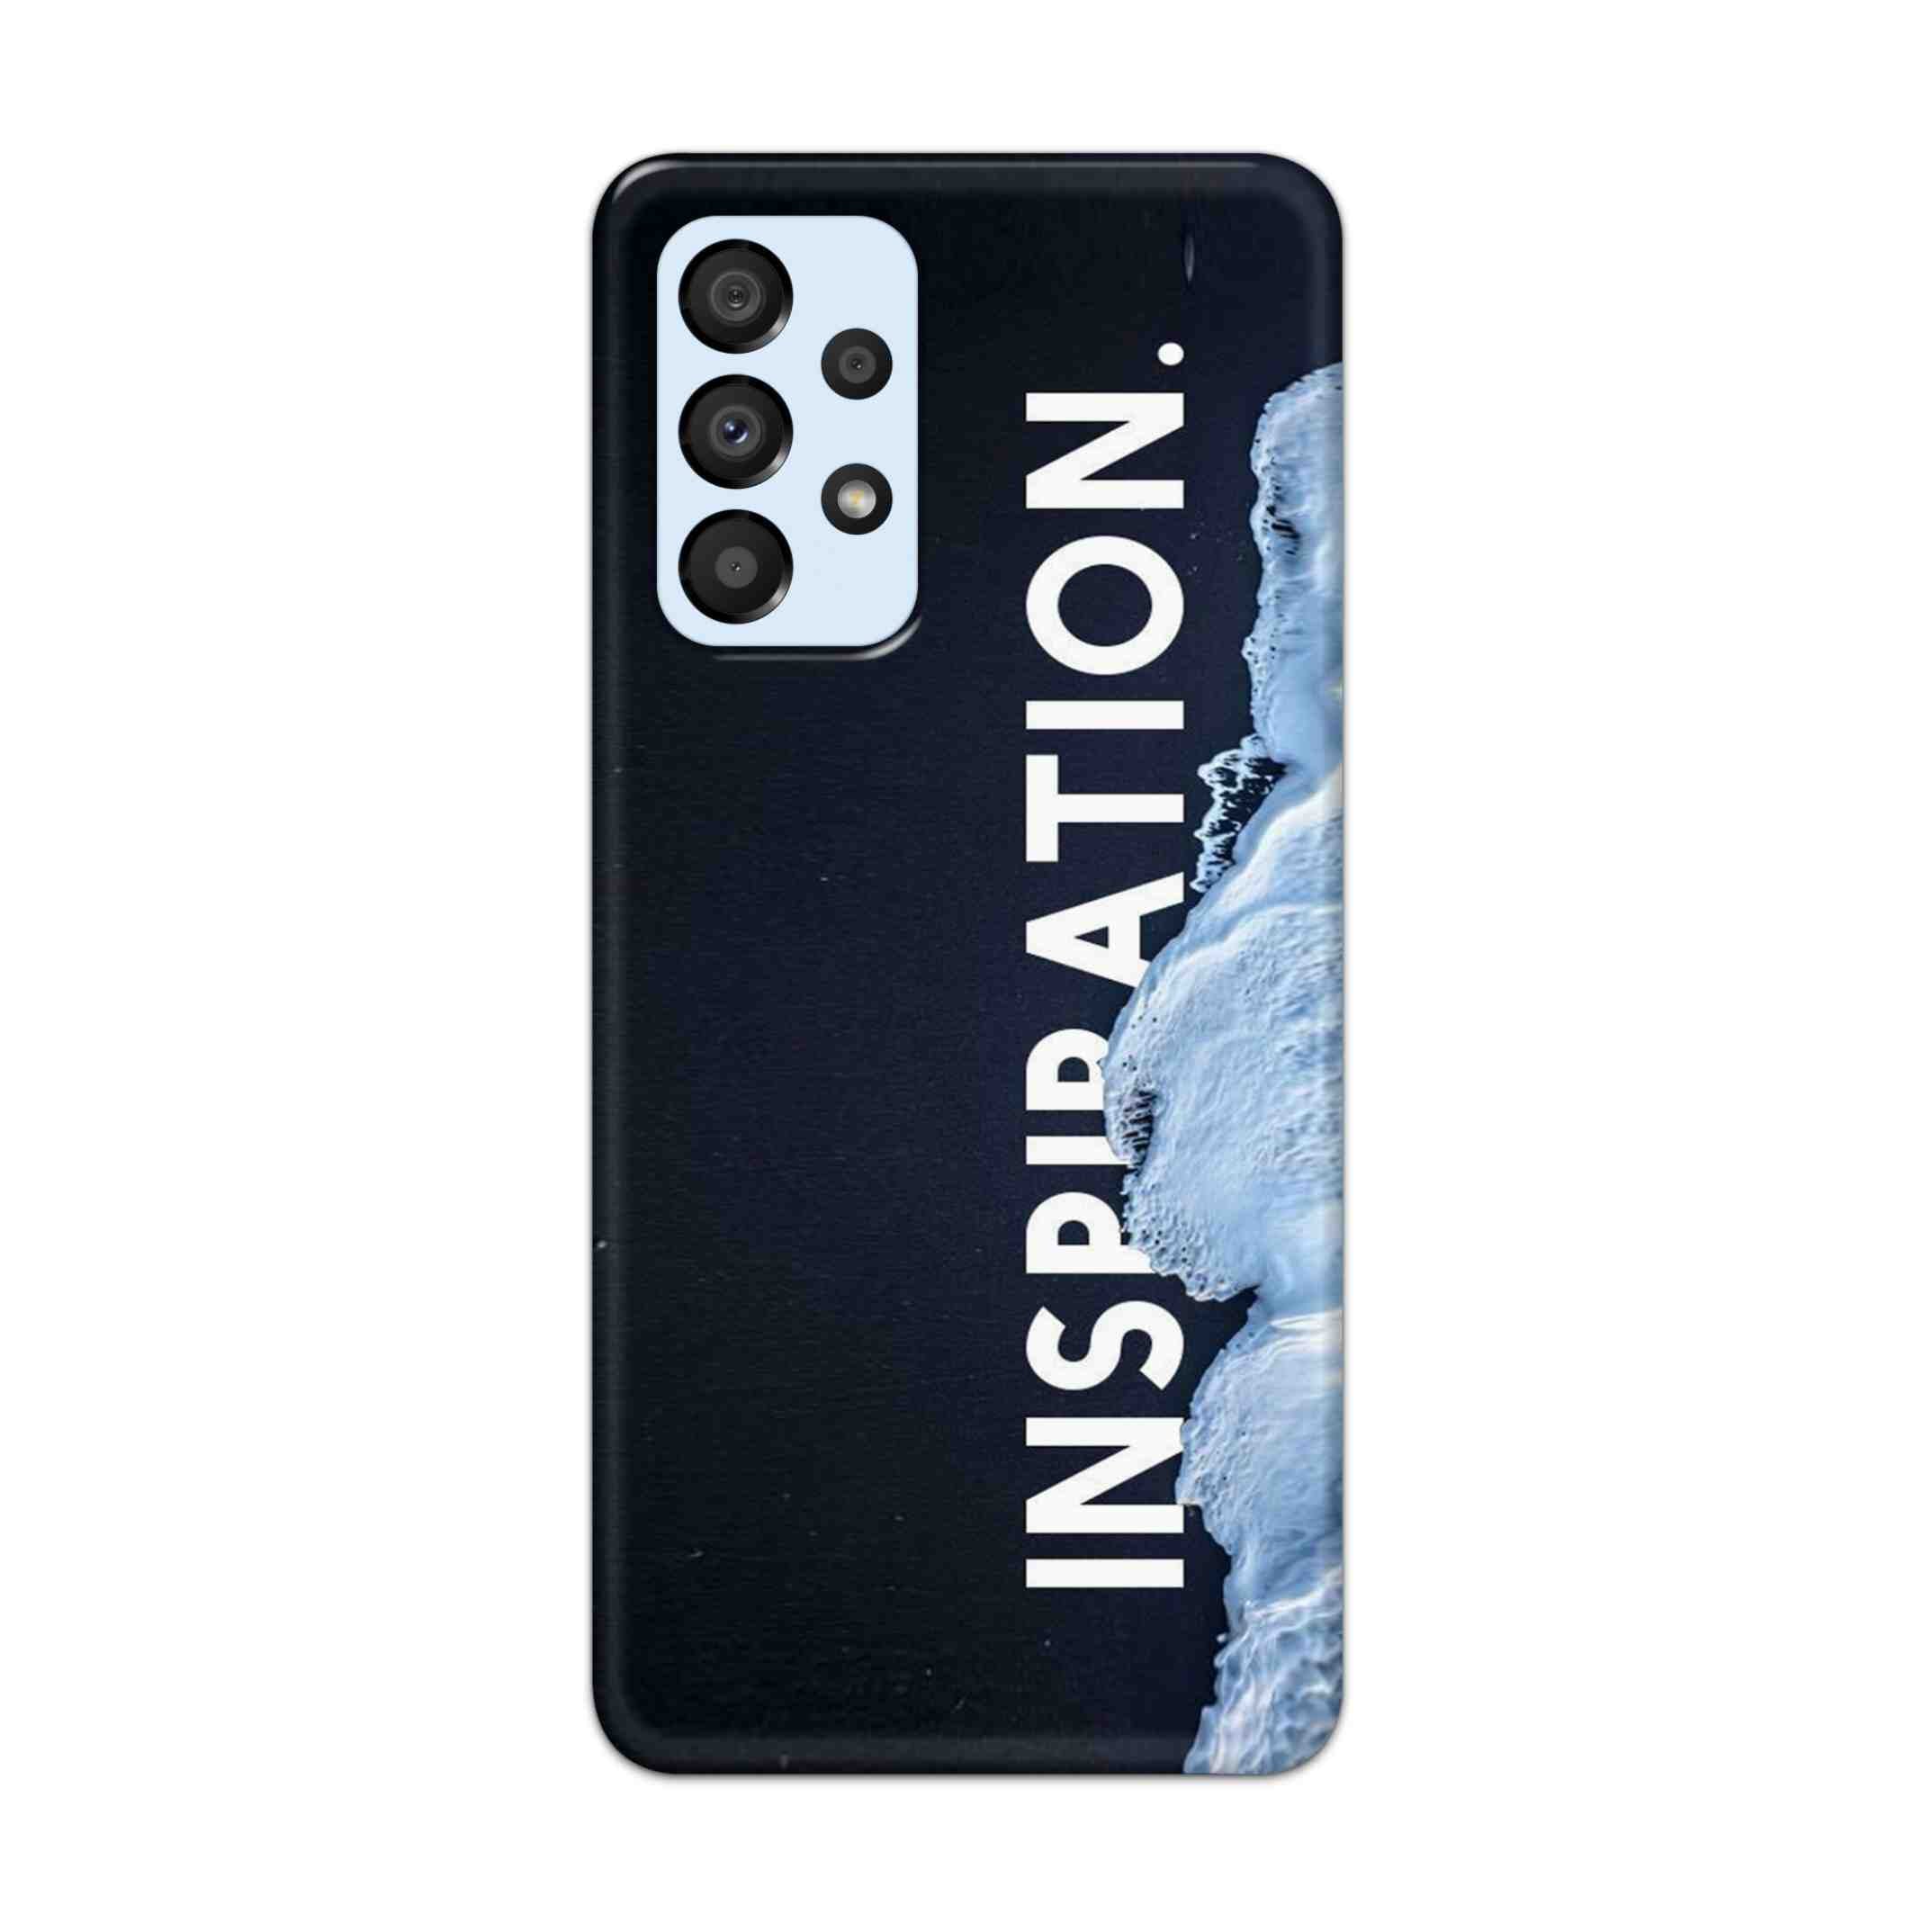 Buy Inspiration Hard Back Mobile Phone Case Cover For Samsung A33 5G Online